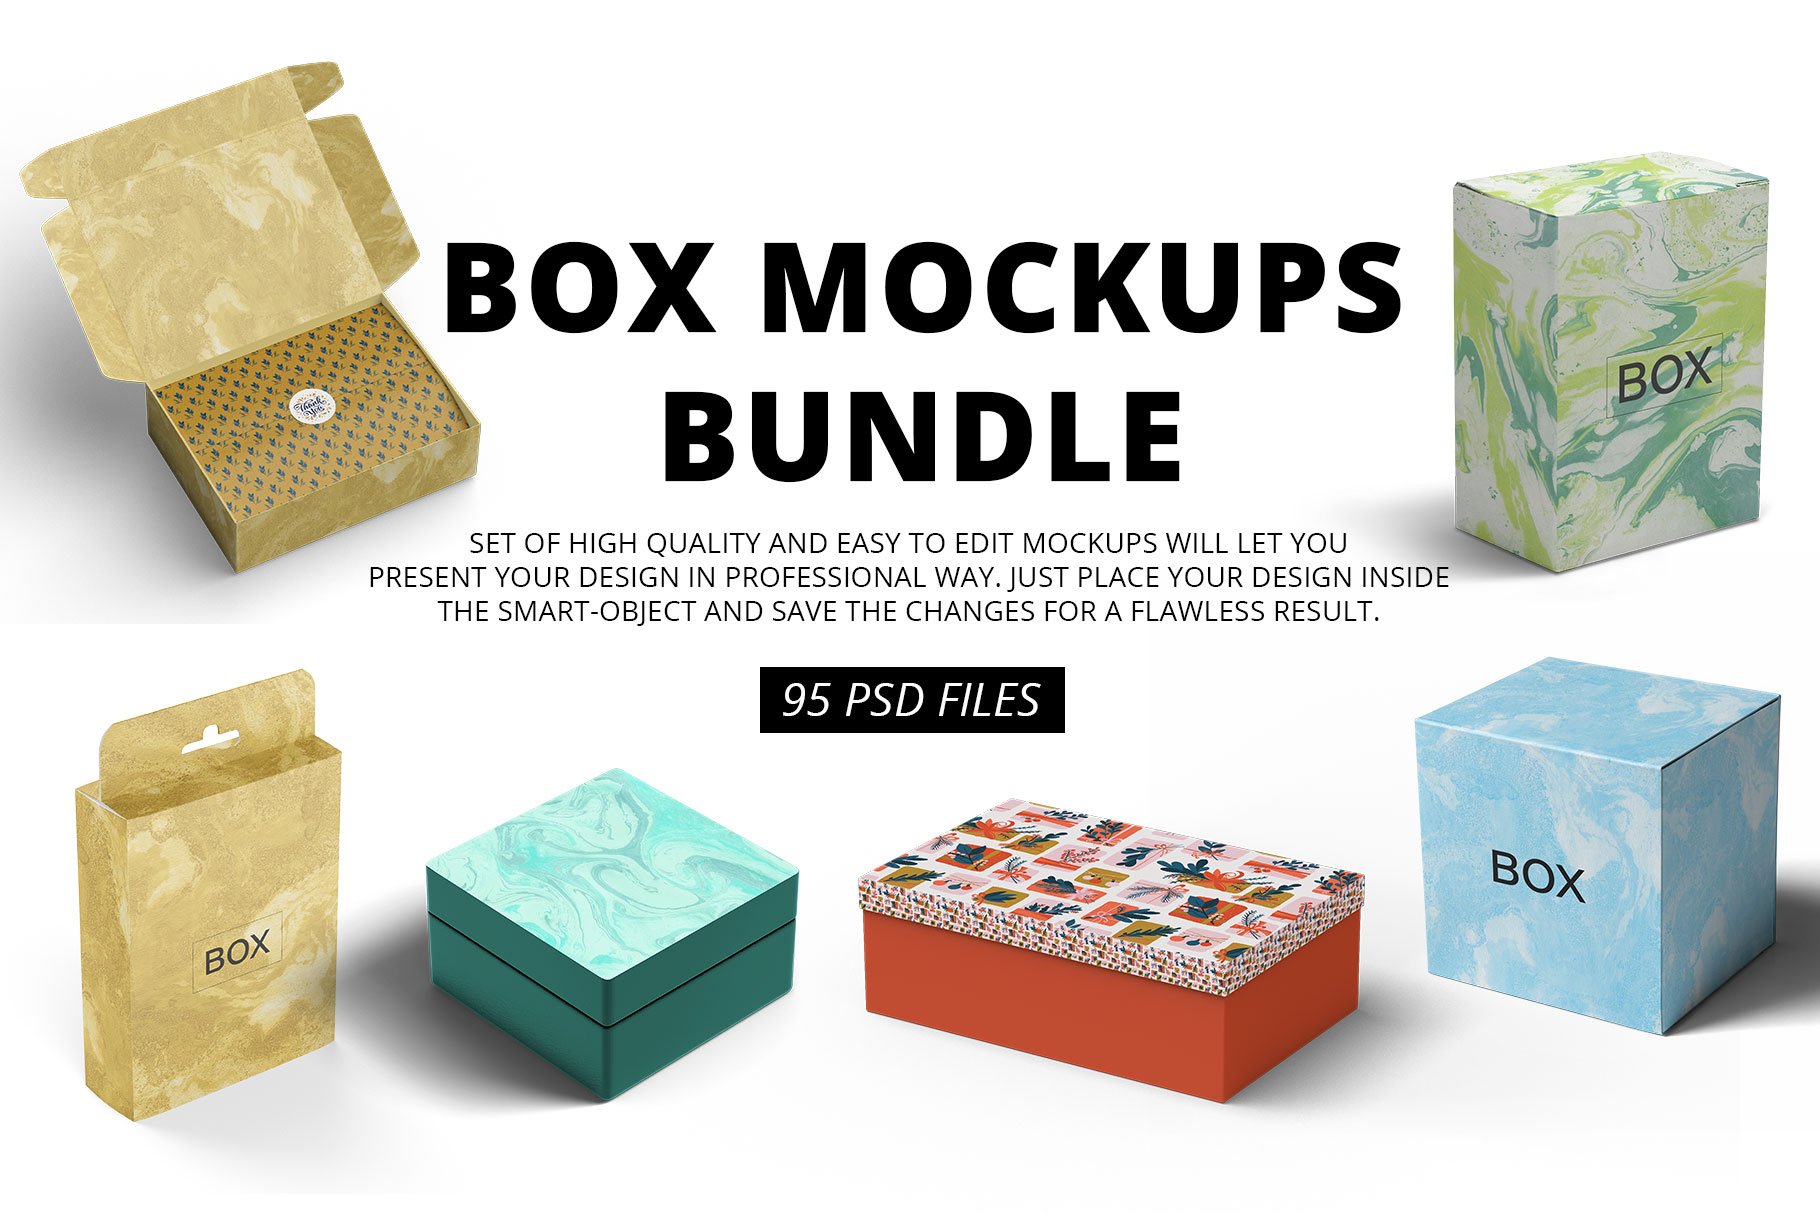 Box Mockups Bundle cover image.